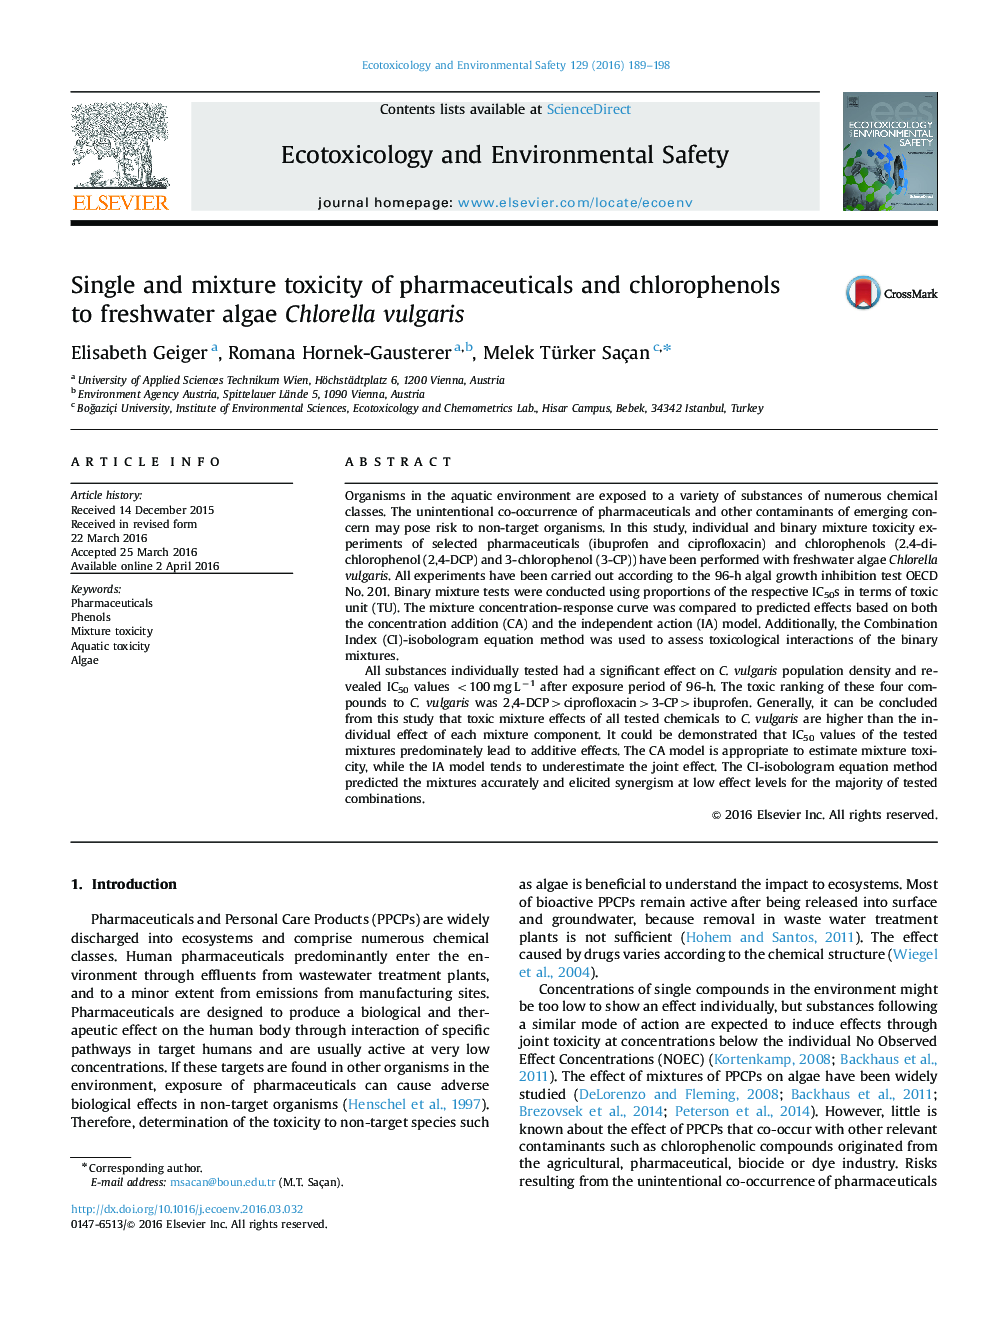 Single and mixture toxicity of pharmaceuticals and chlorophenols to freshwater algae Chlorella vulgaris